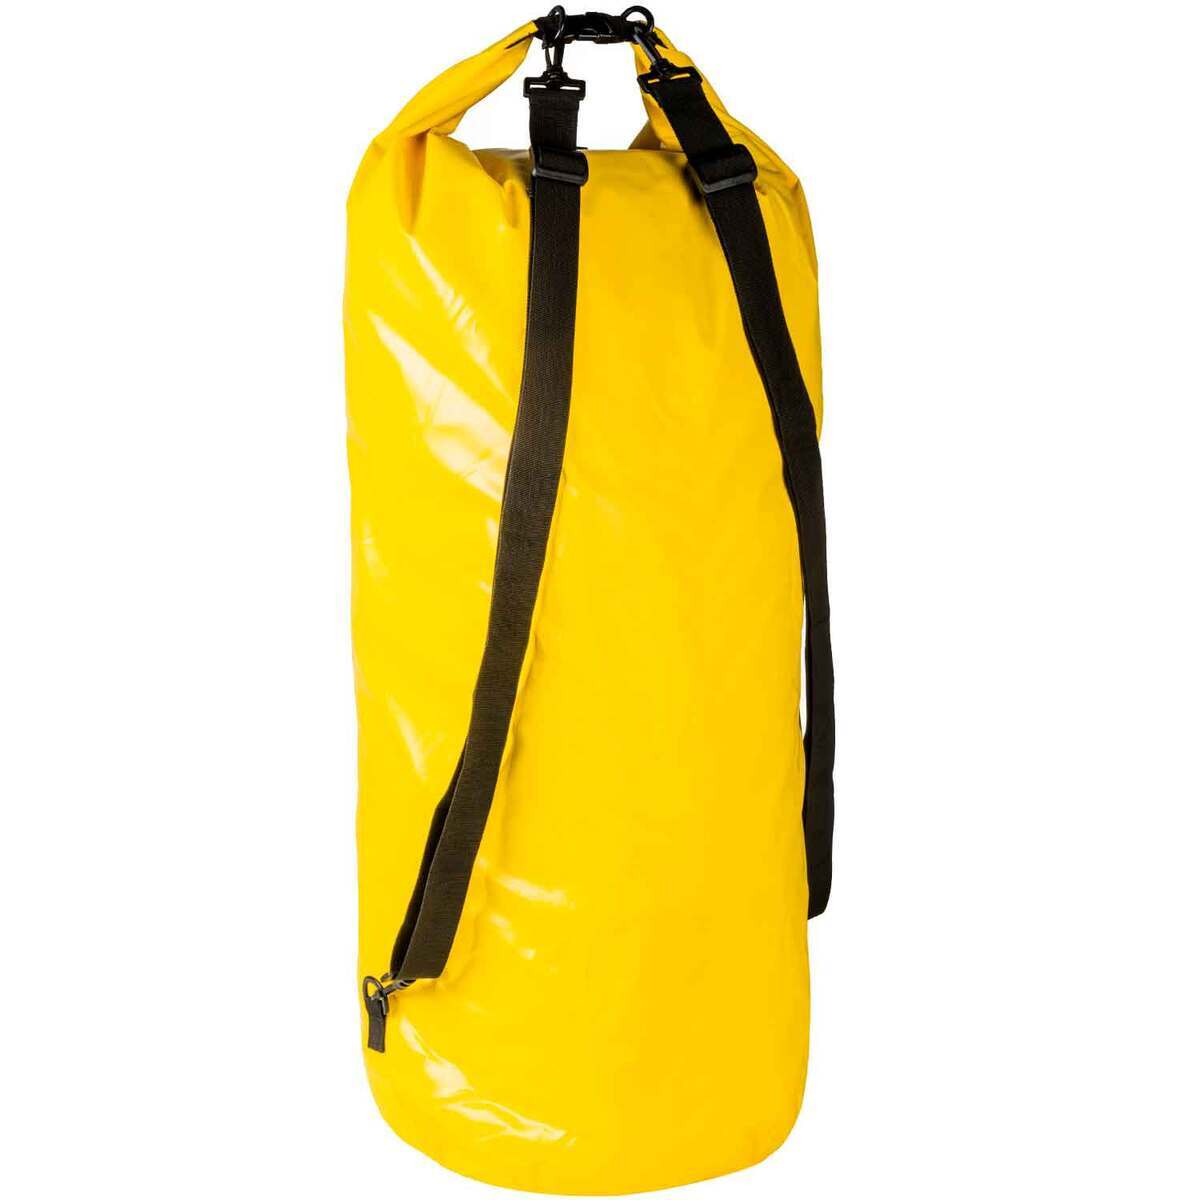 Lost Creek 100 Liter Dry Bag - Yellow | Sportsman's Warehouse